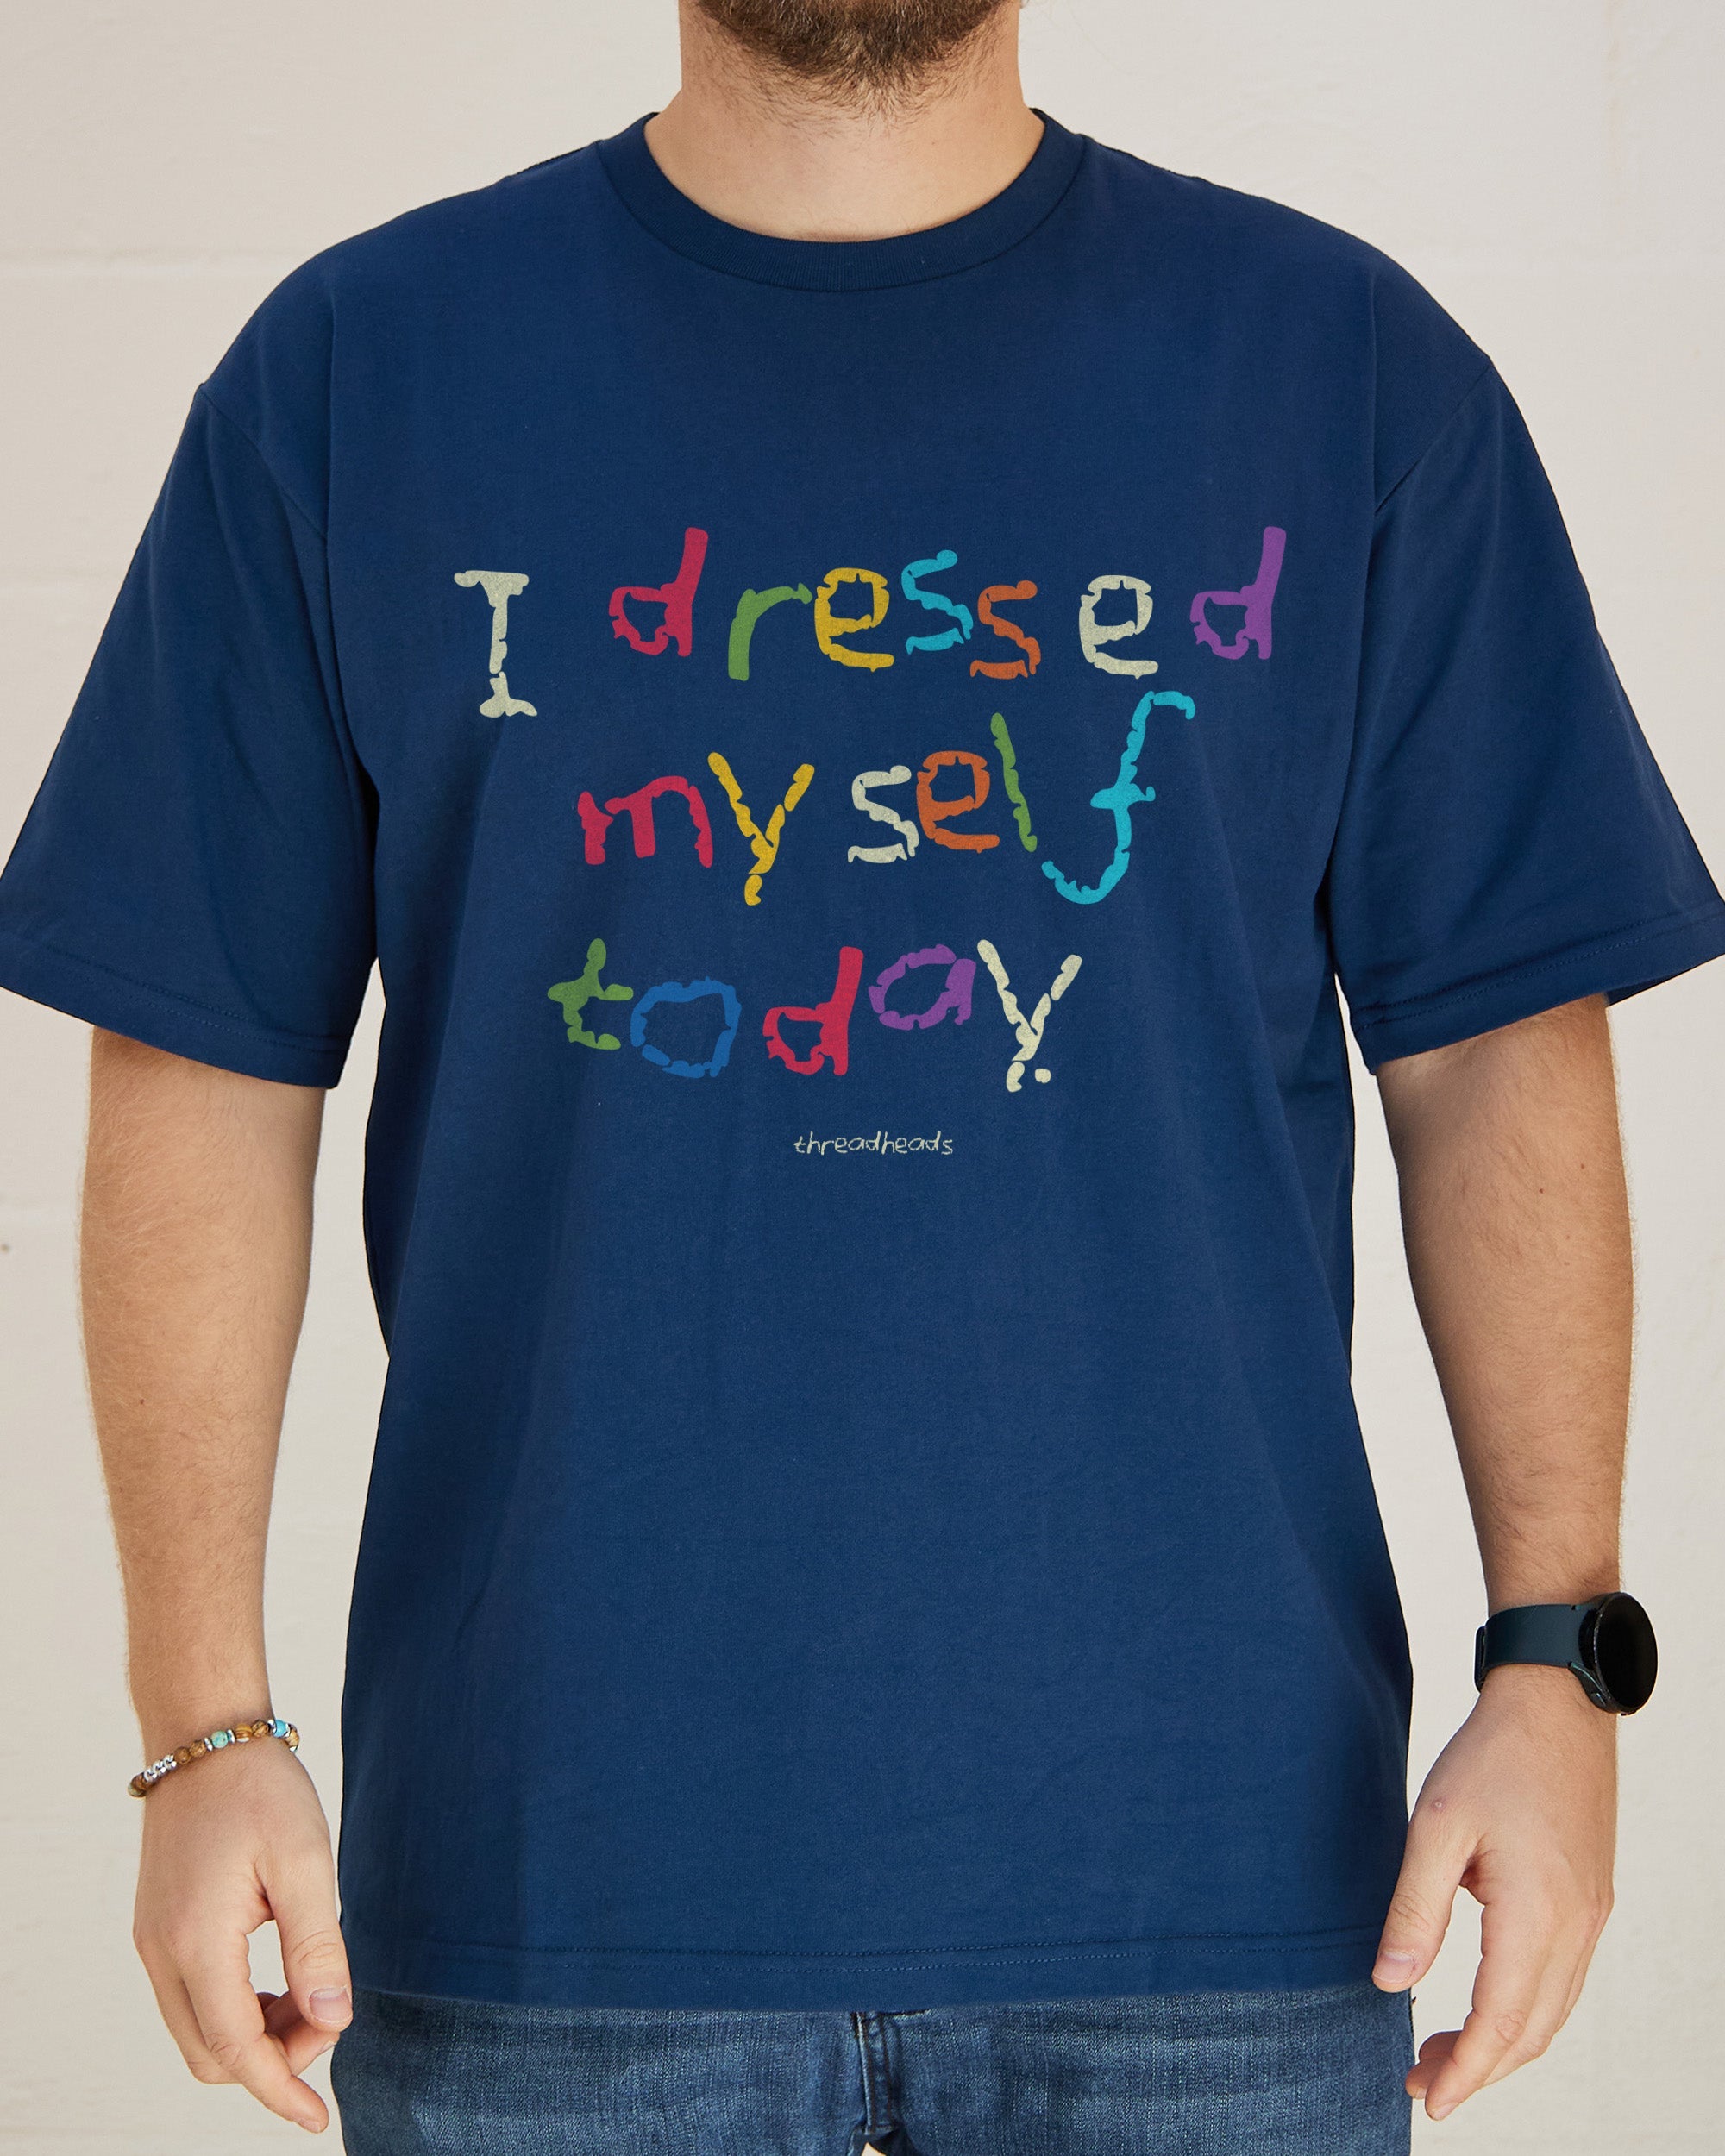 I Dressed Myself Today T-Shirt Australia Online Navy